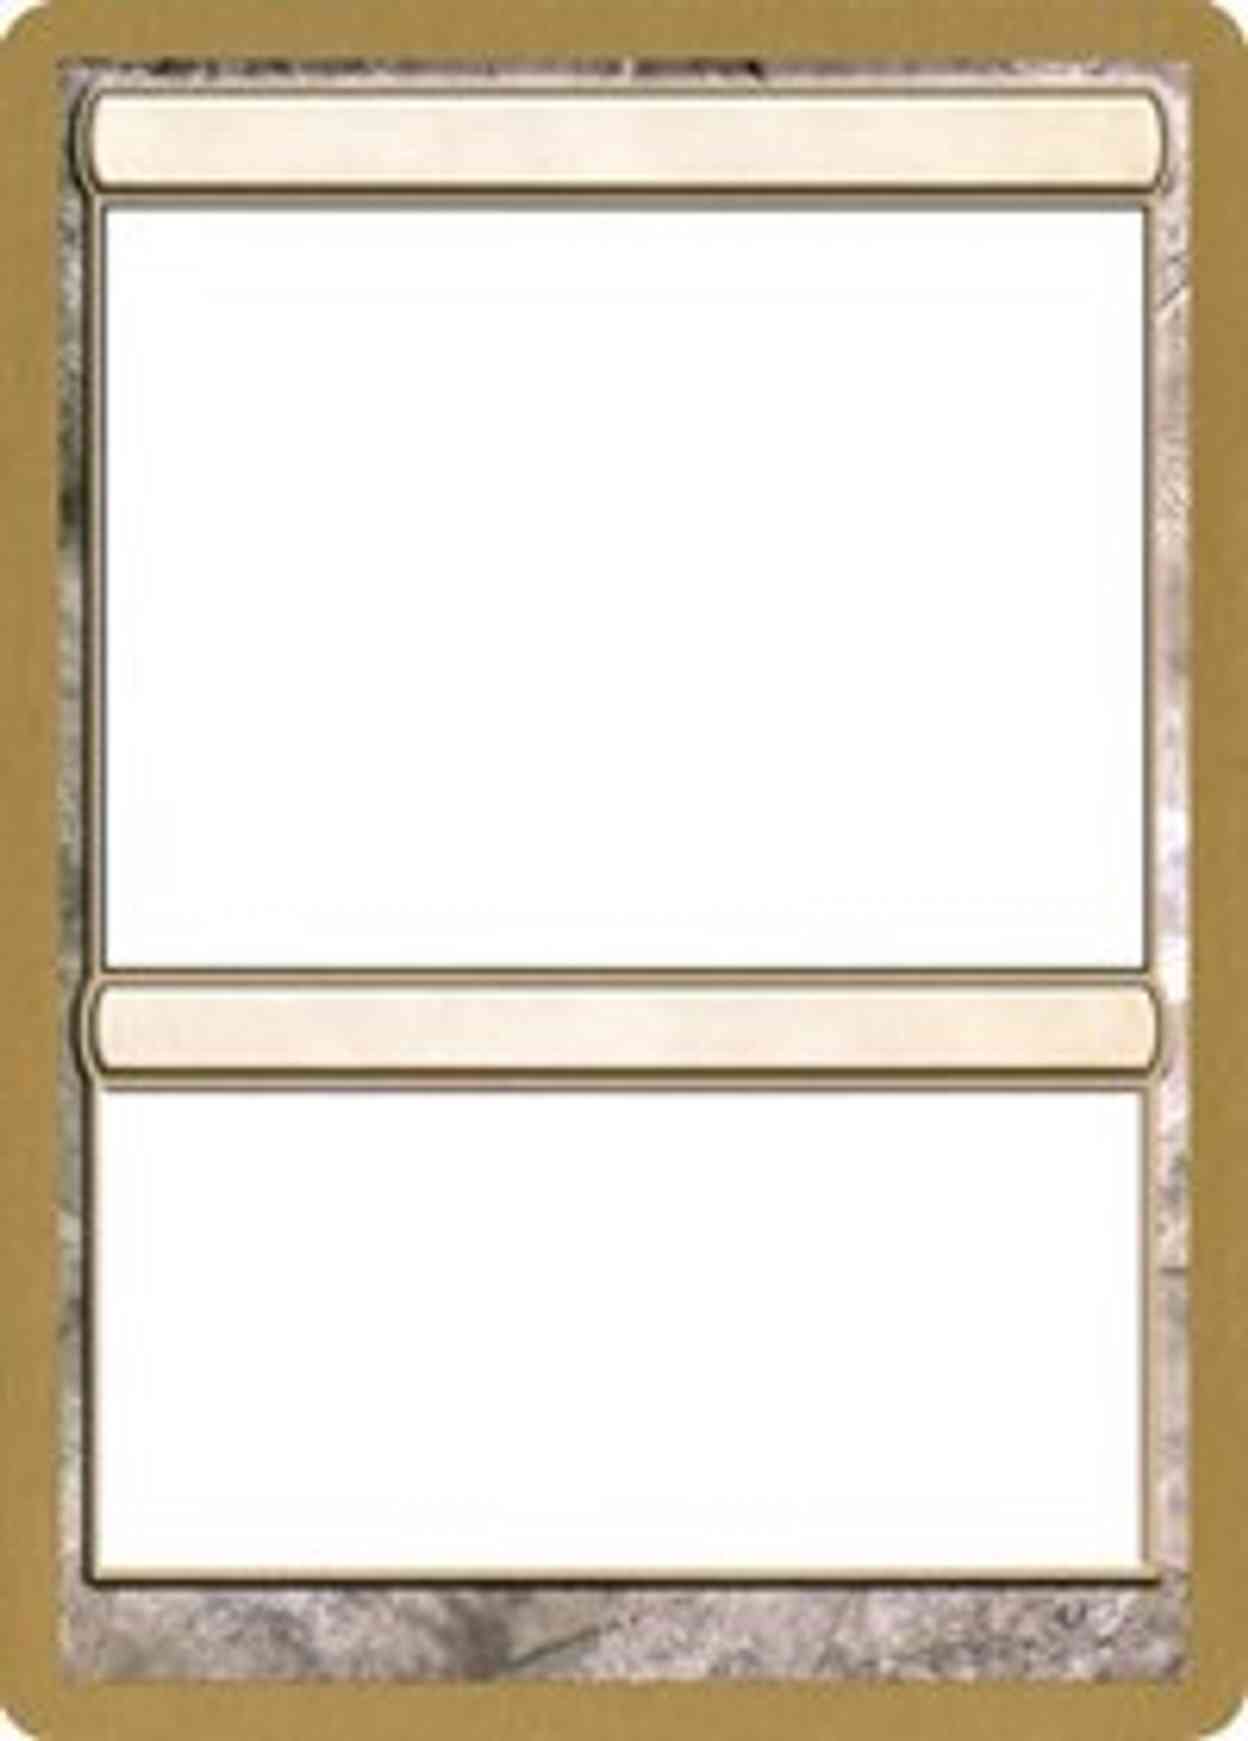 2003 World Championship Blank Card magic card front